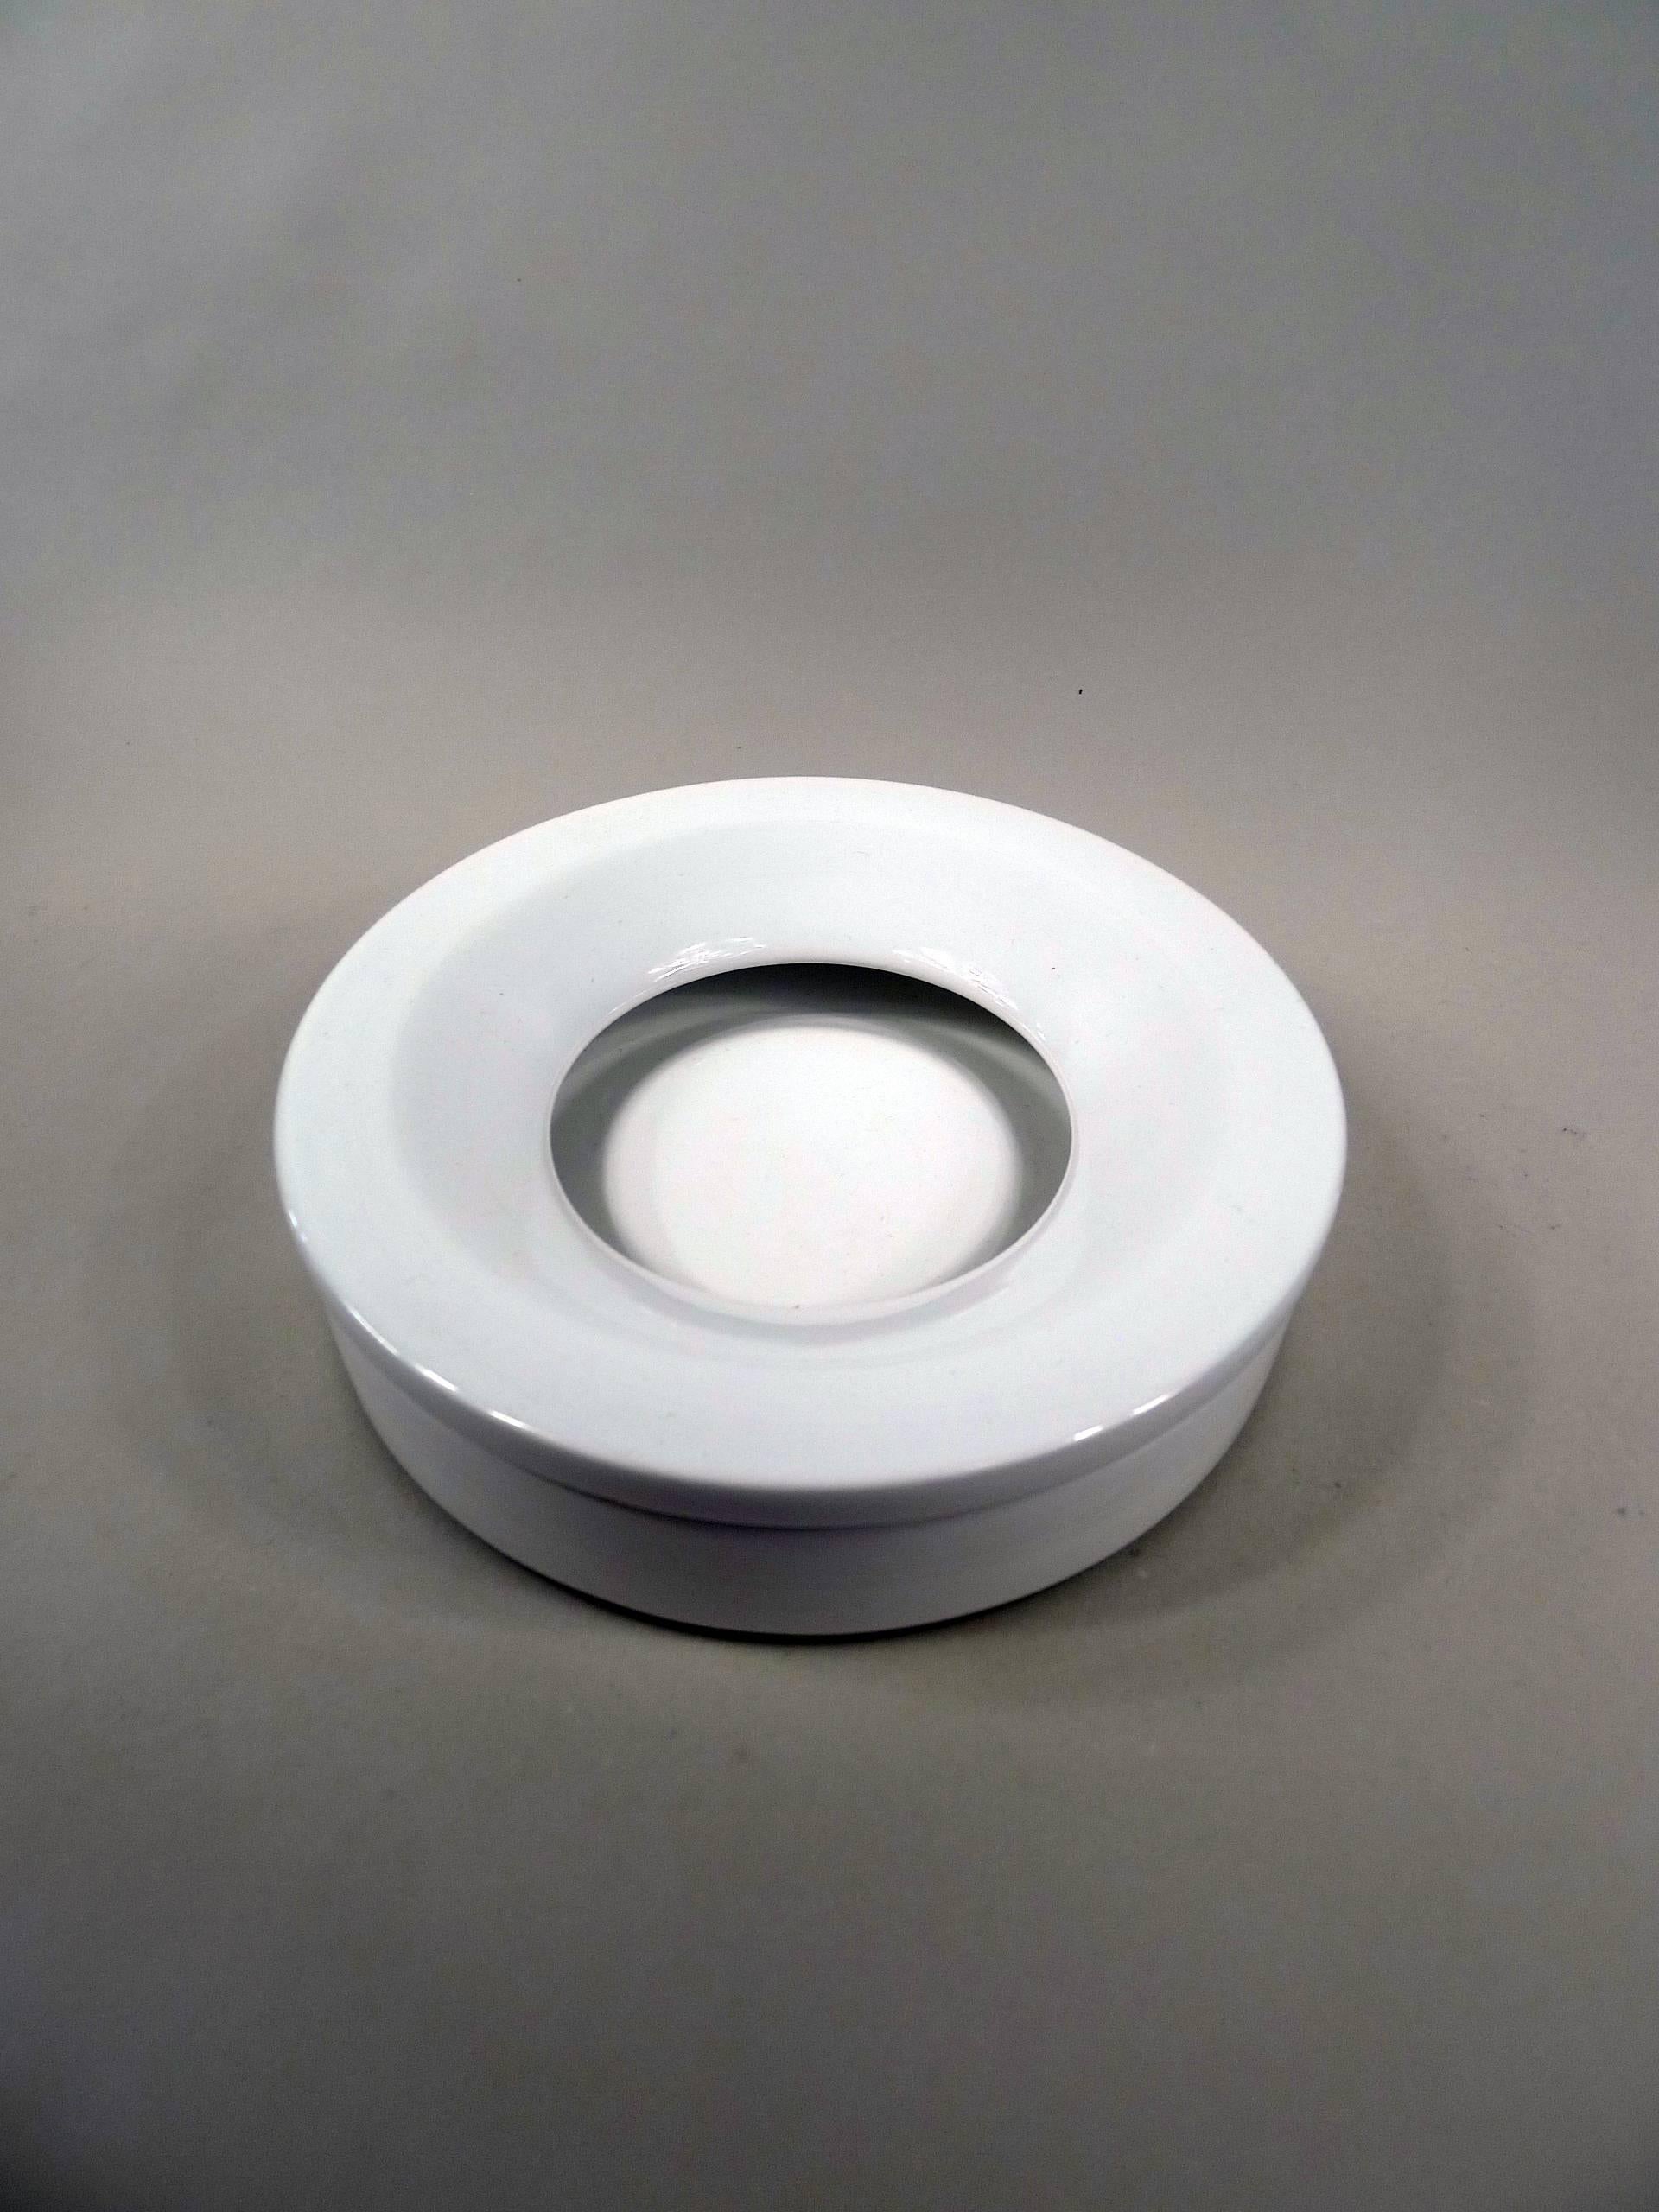 A white ceramic ashtray / centerpiece designed by Angelo Mangiarotti for Danese Milano

